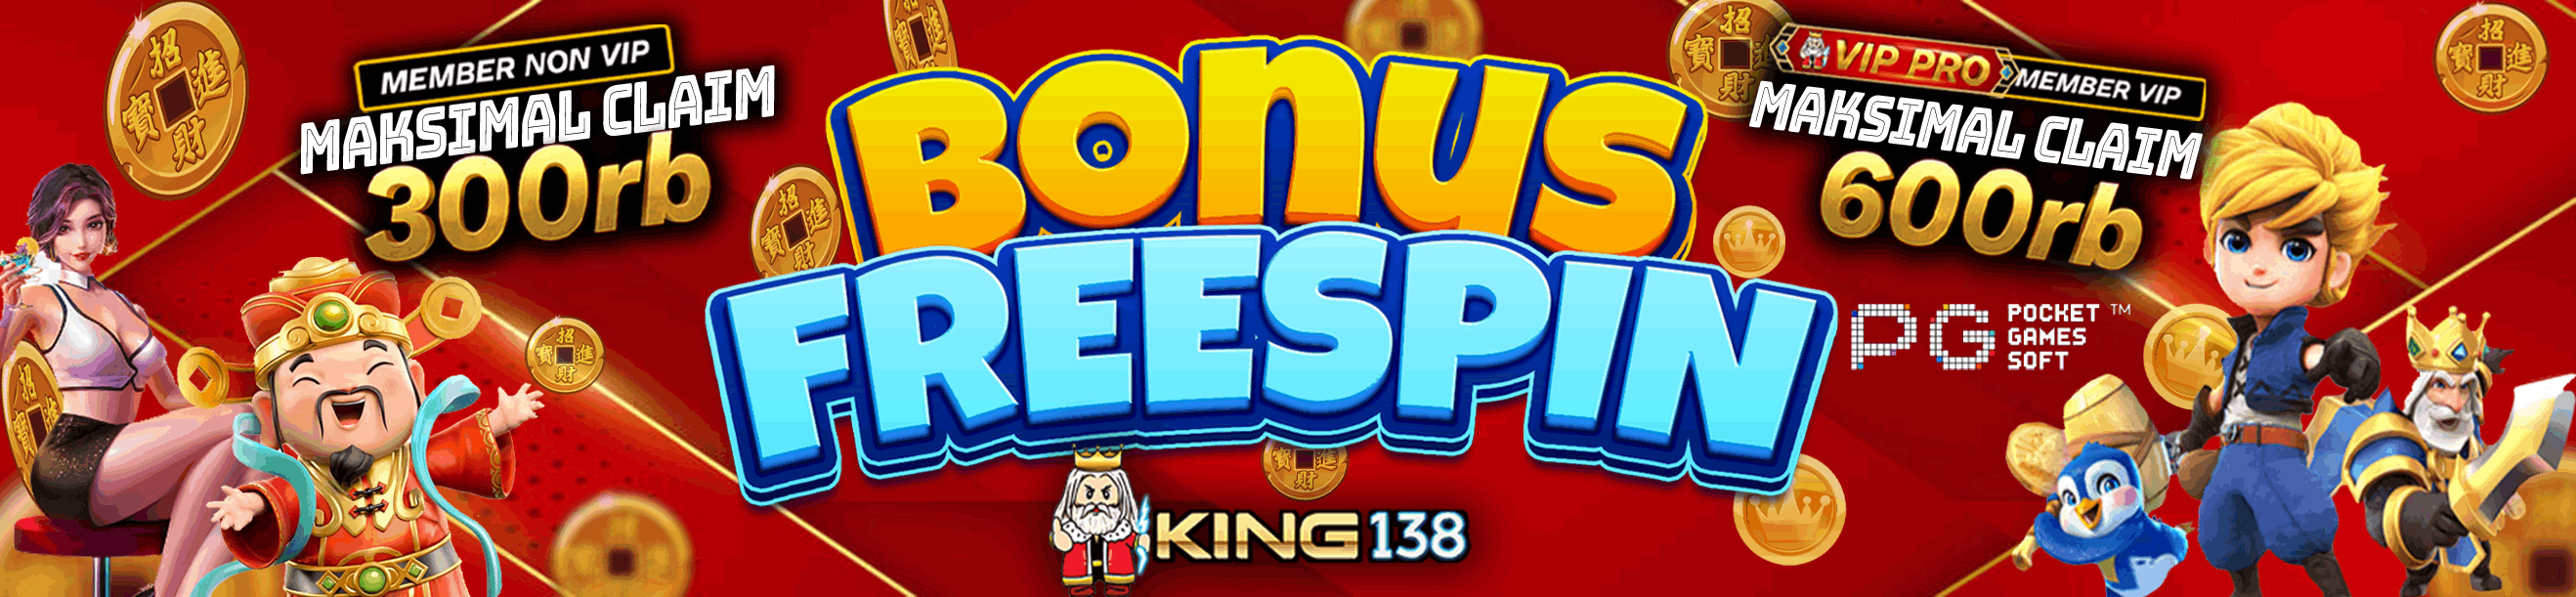 Bonus Freespin PG SOFT KING138